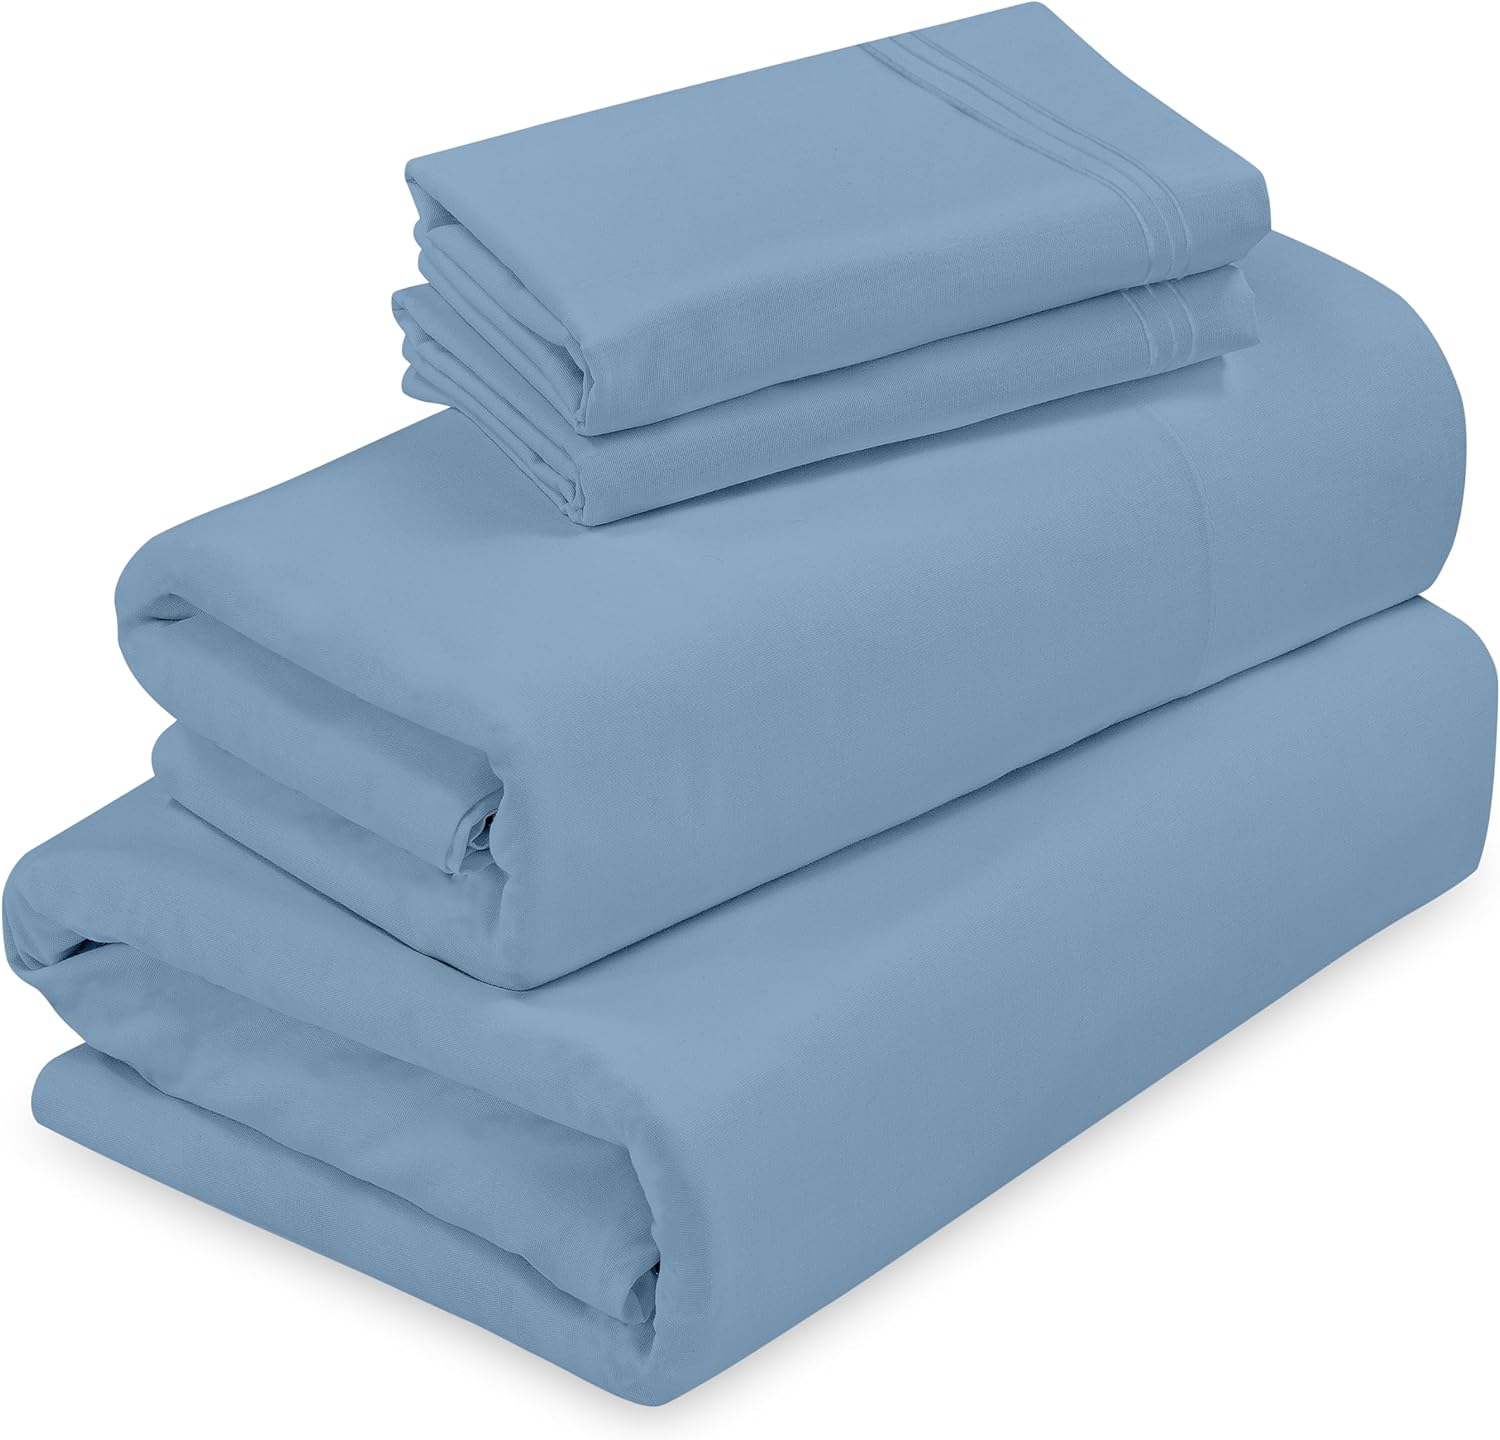 ROYALE LINENS - 4 Piece King Bed Sheet - Soft Brushed Microfiber 1800 Bedding Set - 1 Fitted Sheet, 1 Flat Sheet, 2 Pillow Cases - Wrinkle & Fade Resistant Luxury King Size Sheet Set (King, Lake Blue)